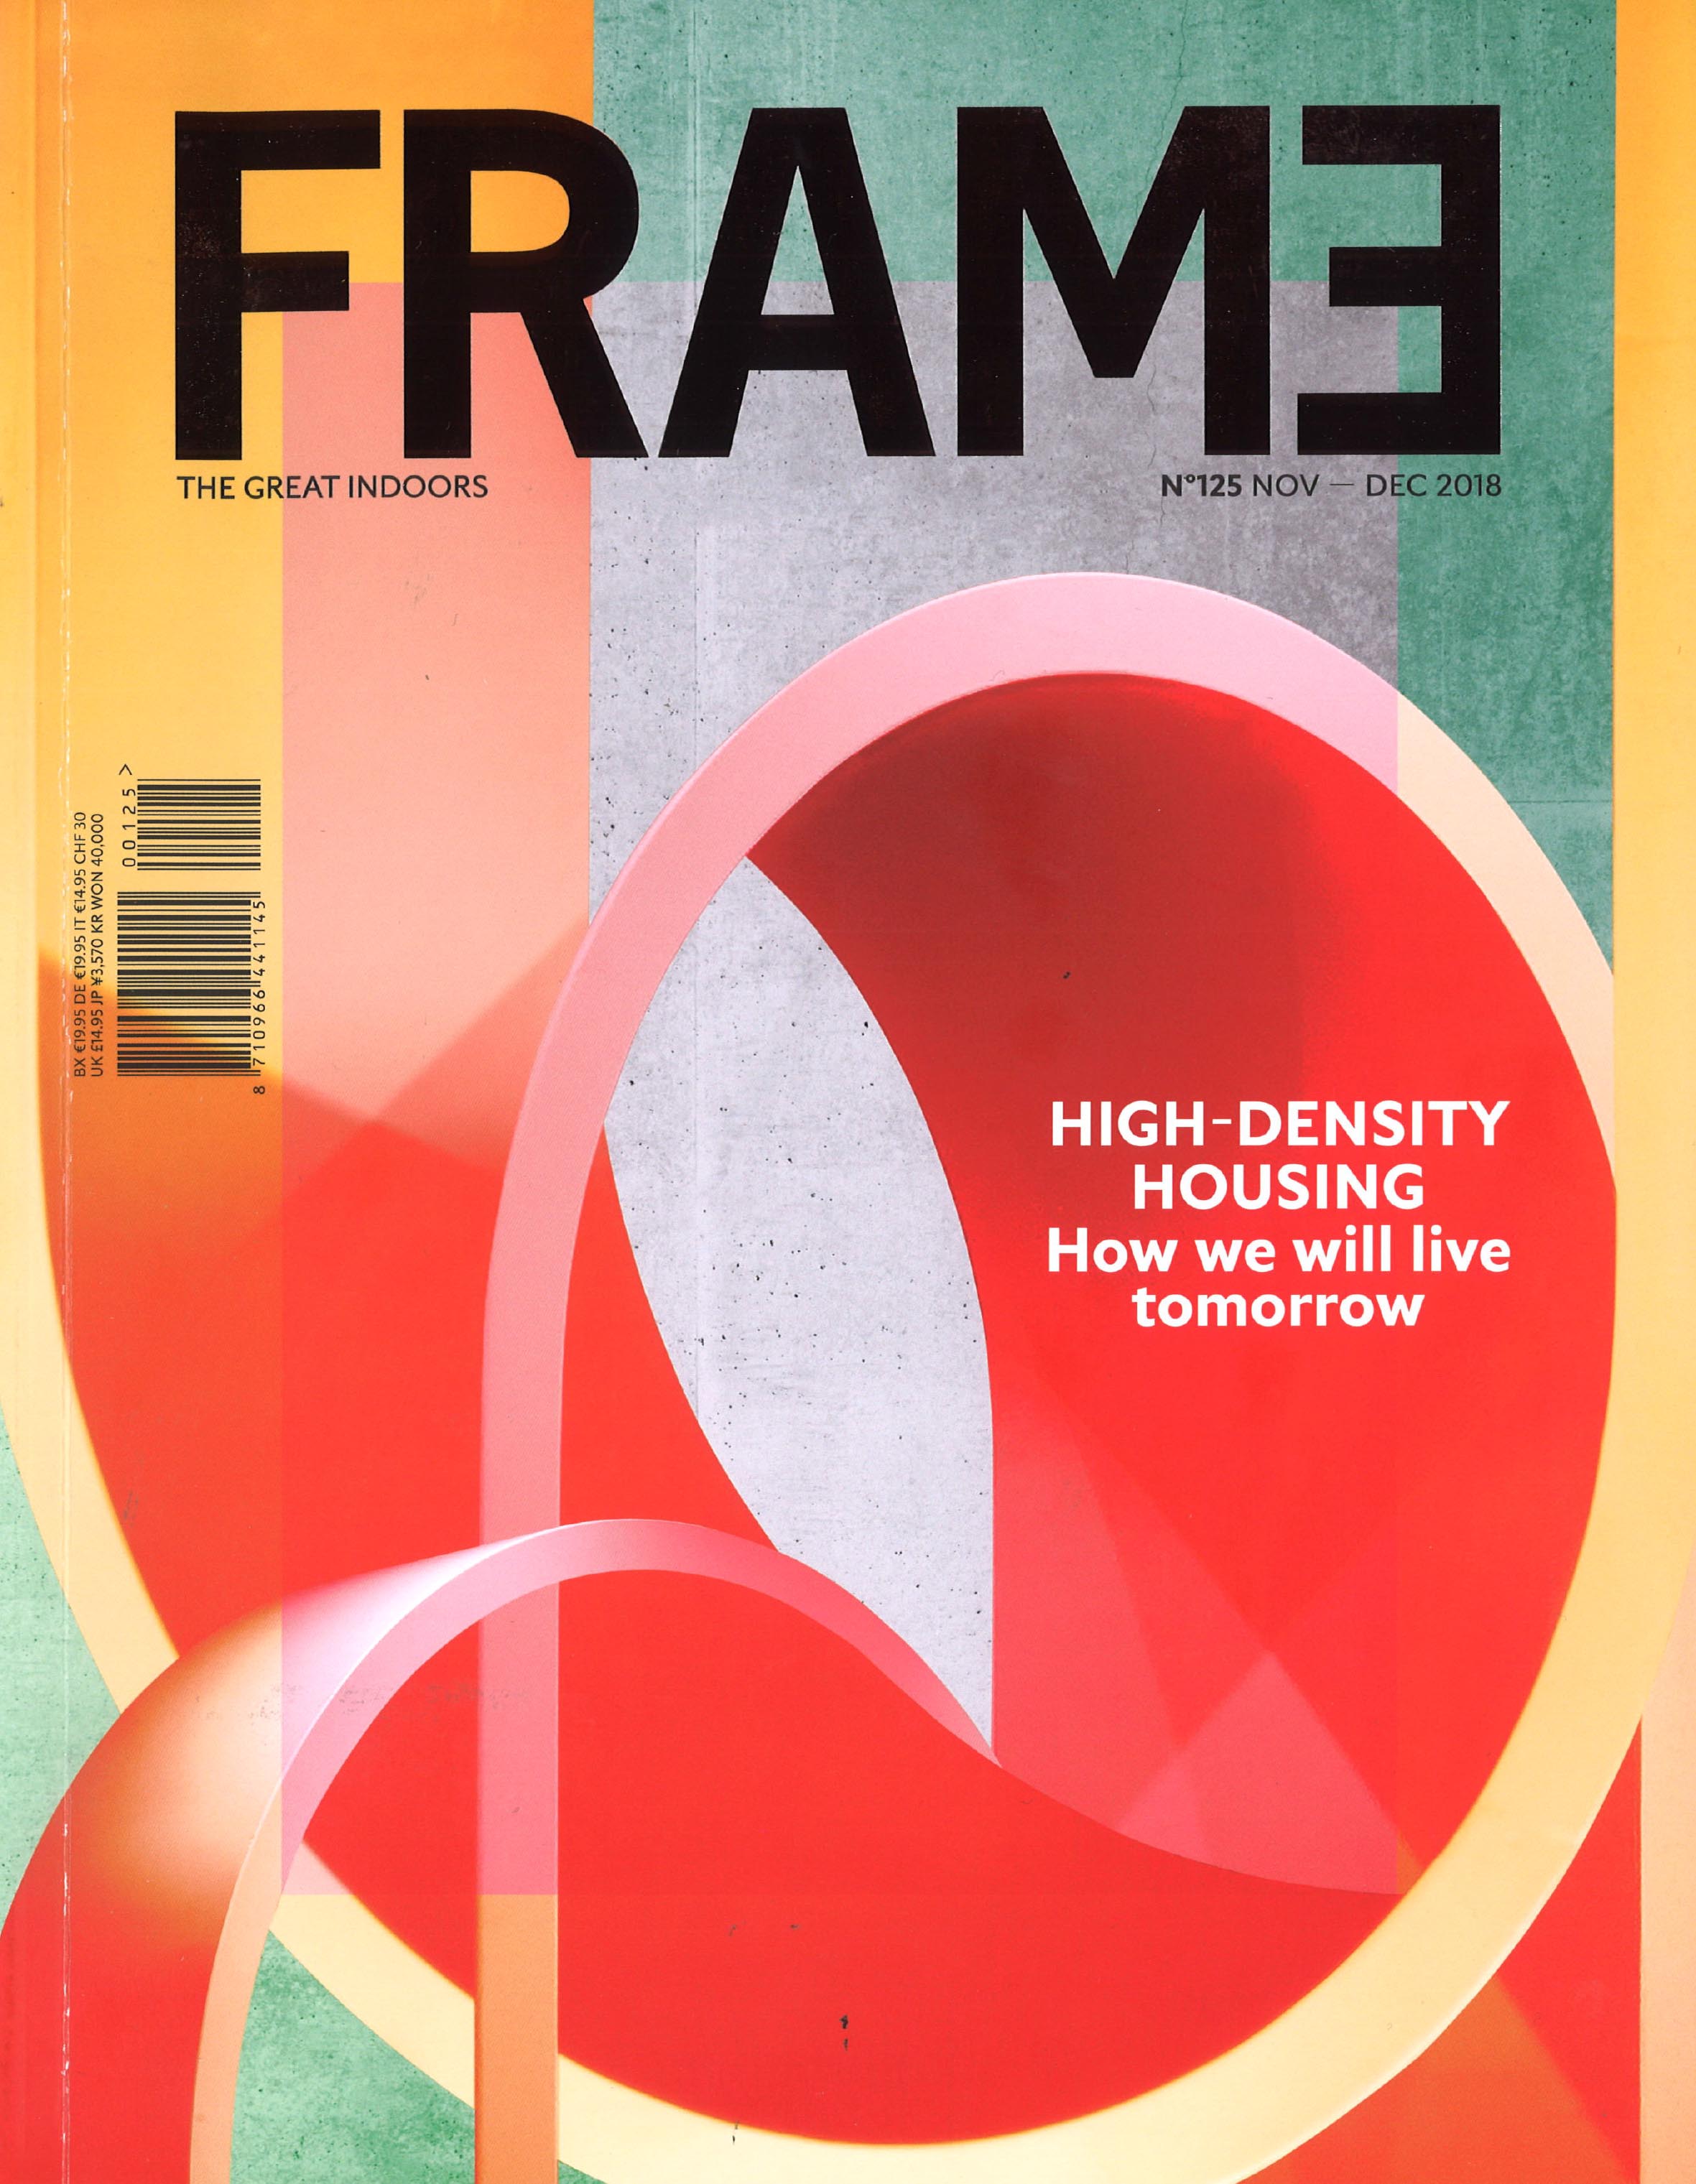 001 Frame magazine 2018 Lex de gooijer Interiors dornbracht .jpg